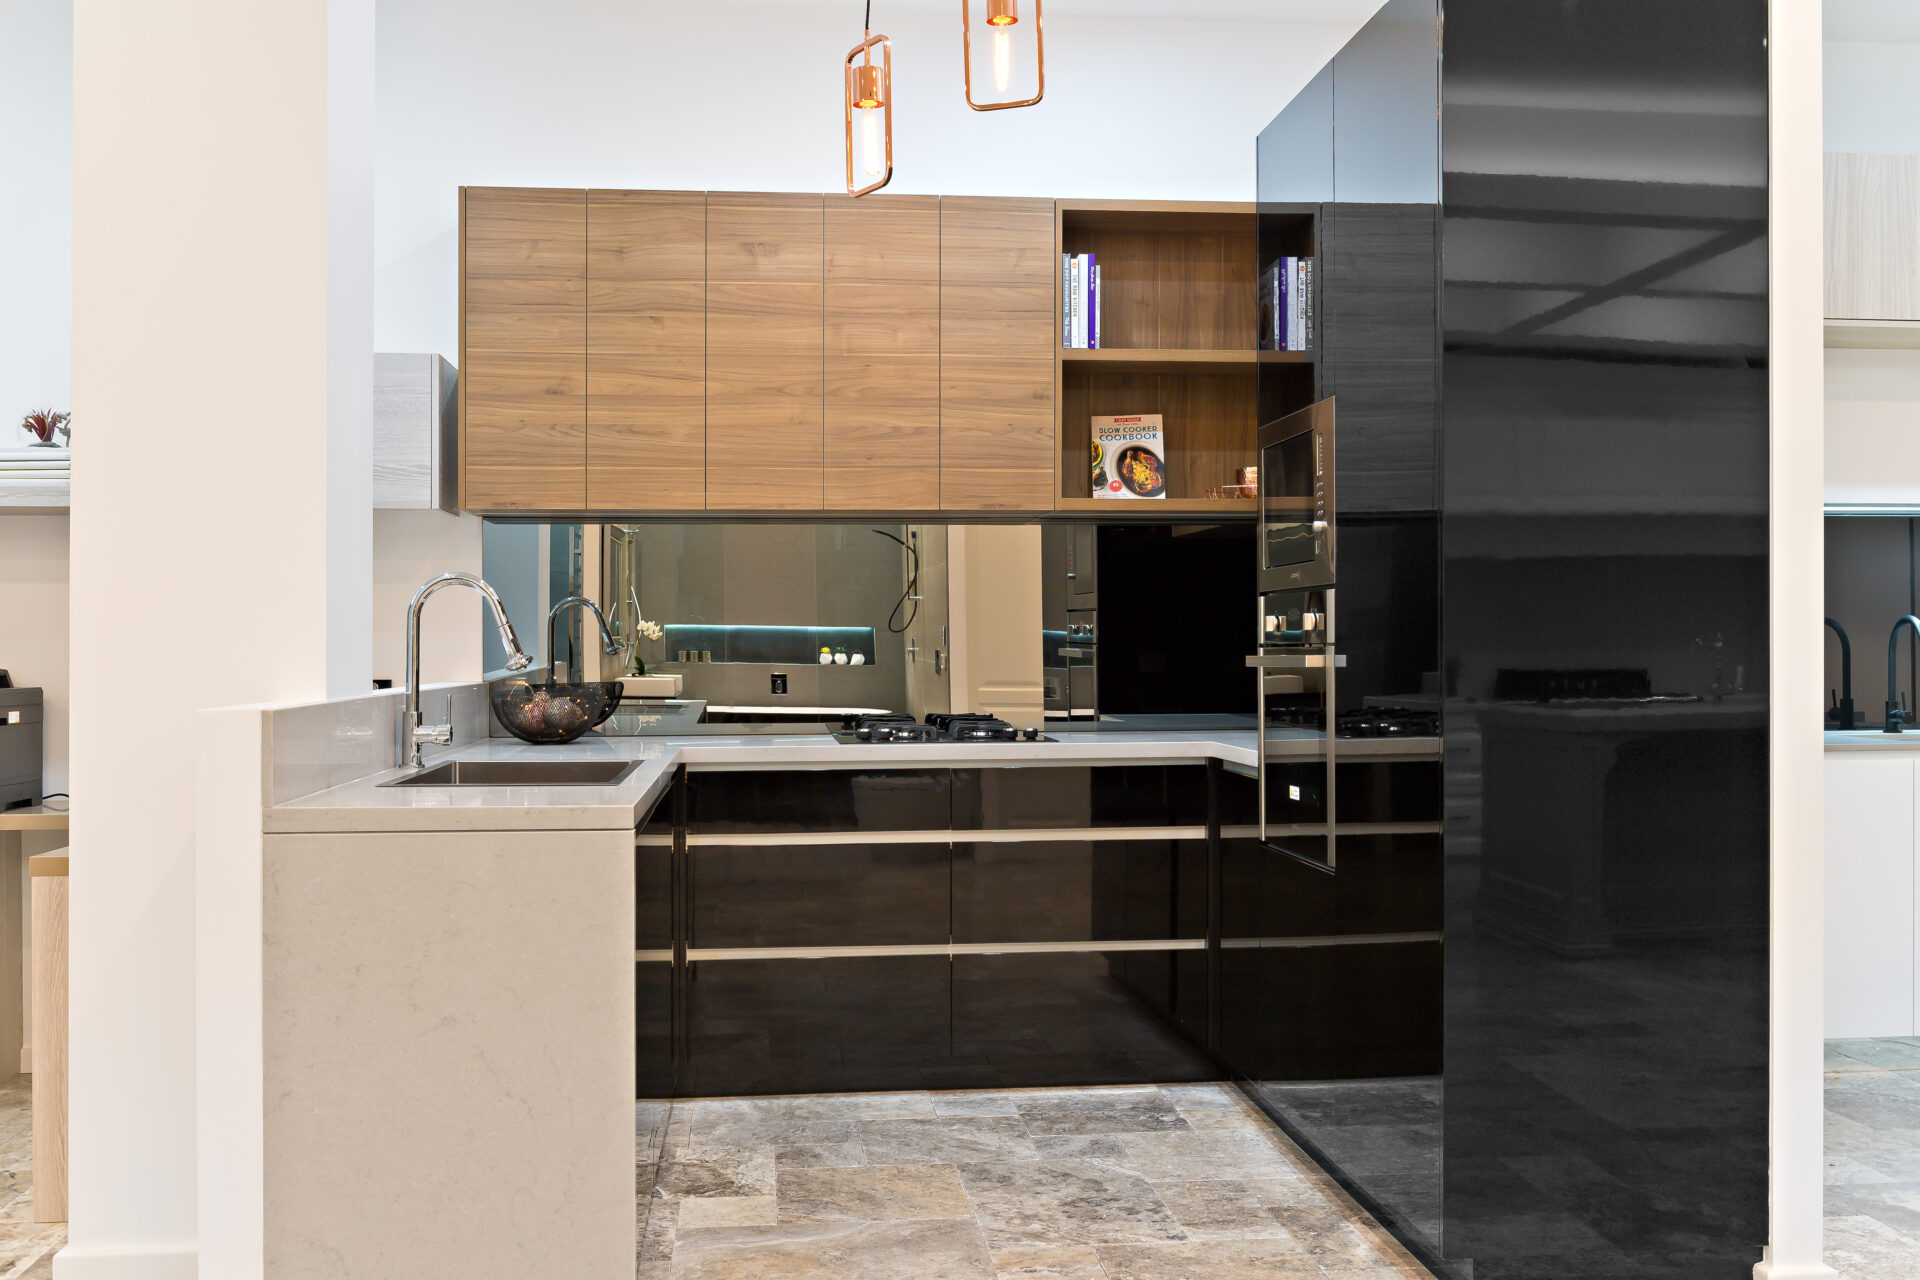 kitchen renovations sydney - Inhaus Living